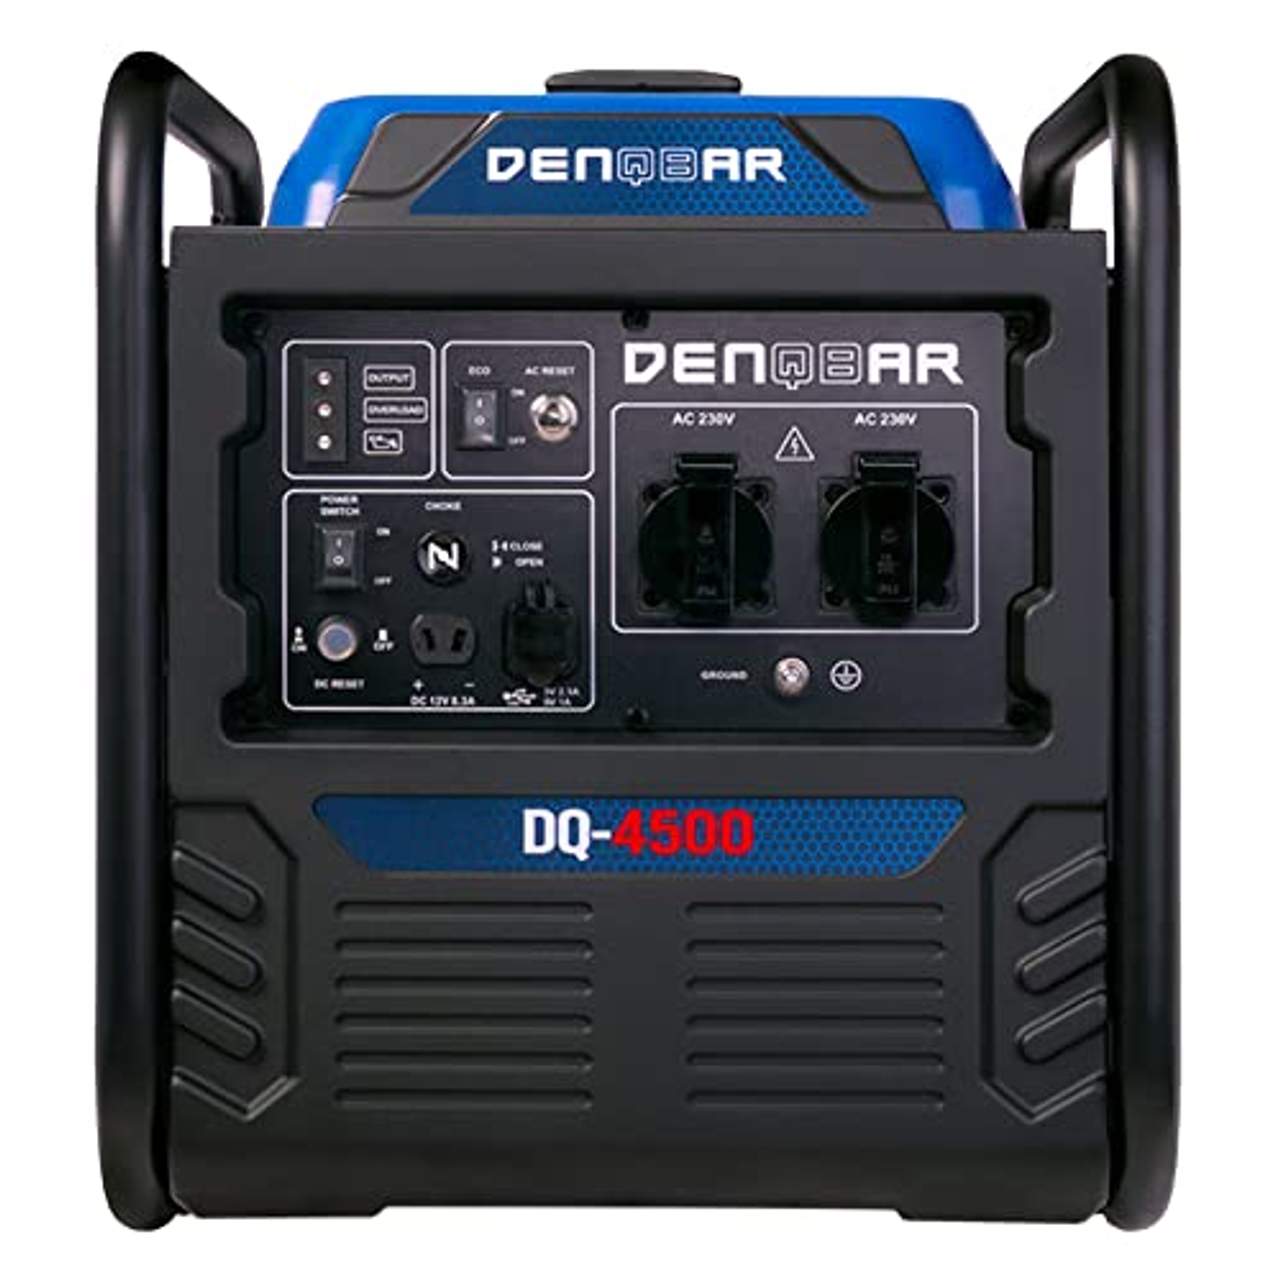 Denqbar 4500 W Inverter Stromerzeuger Open Frame Digitaler Generator